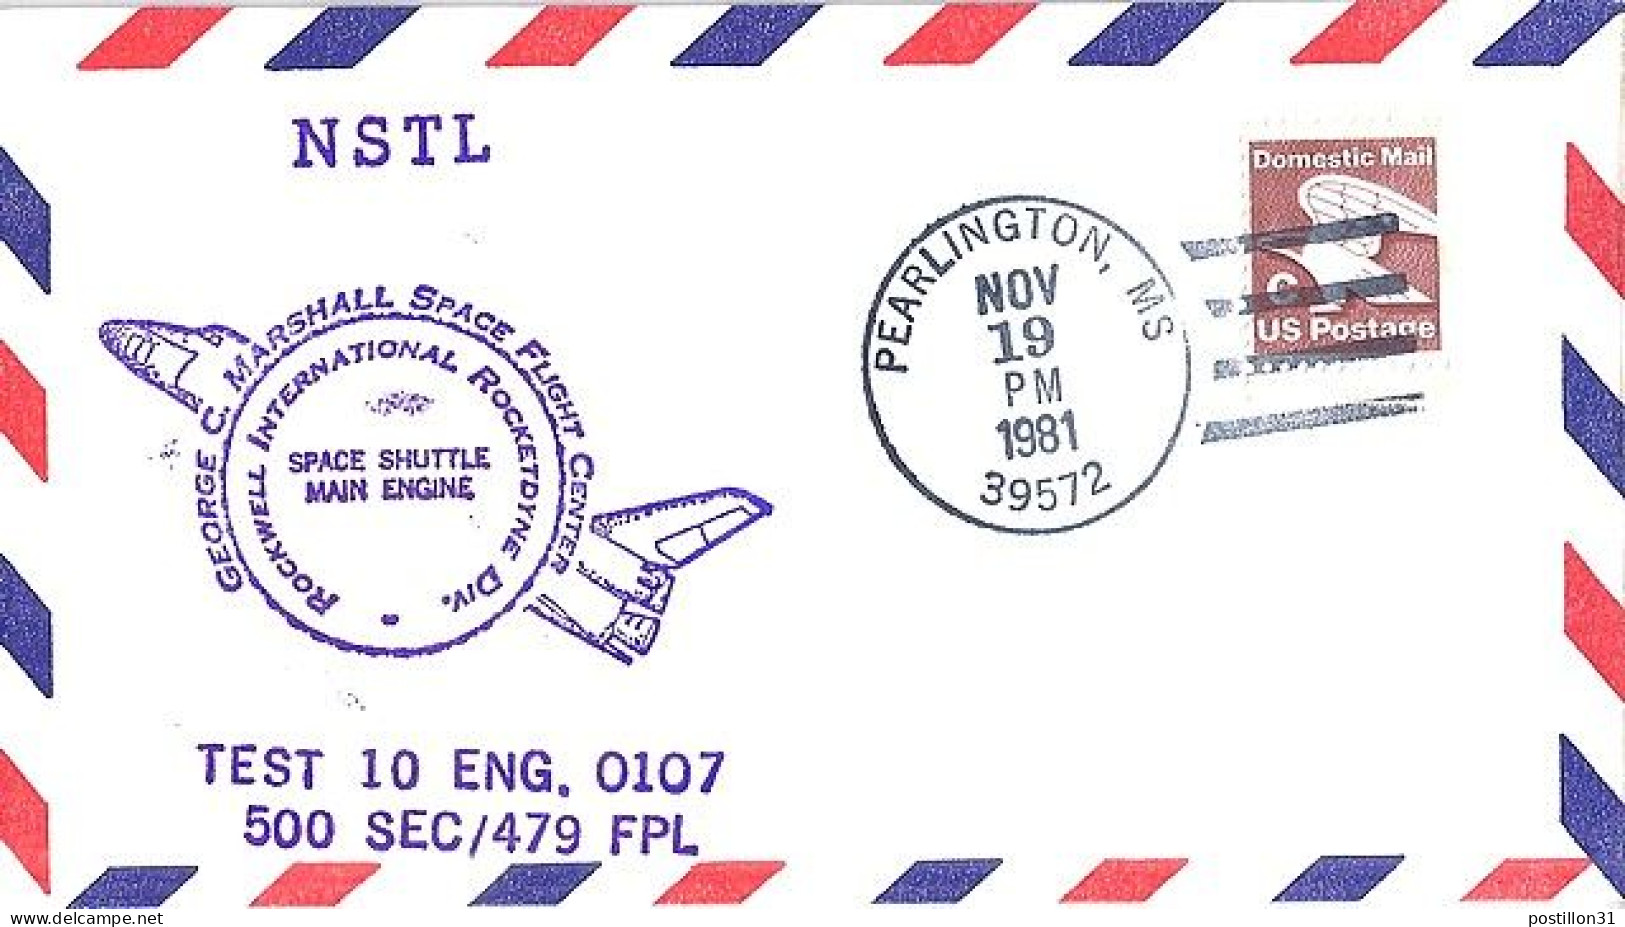 USA-AERO N° 1355 S/L.DE PEARLINGTON/19.11.81  THEME: NAVETTE SPACIALE - 3c. 1961-... Covers